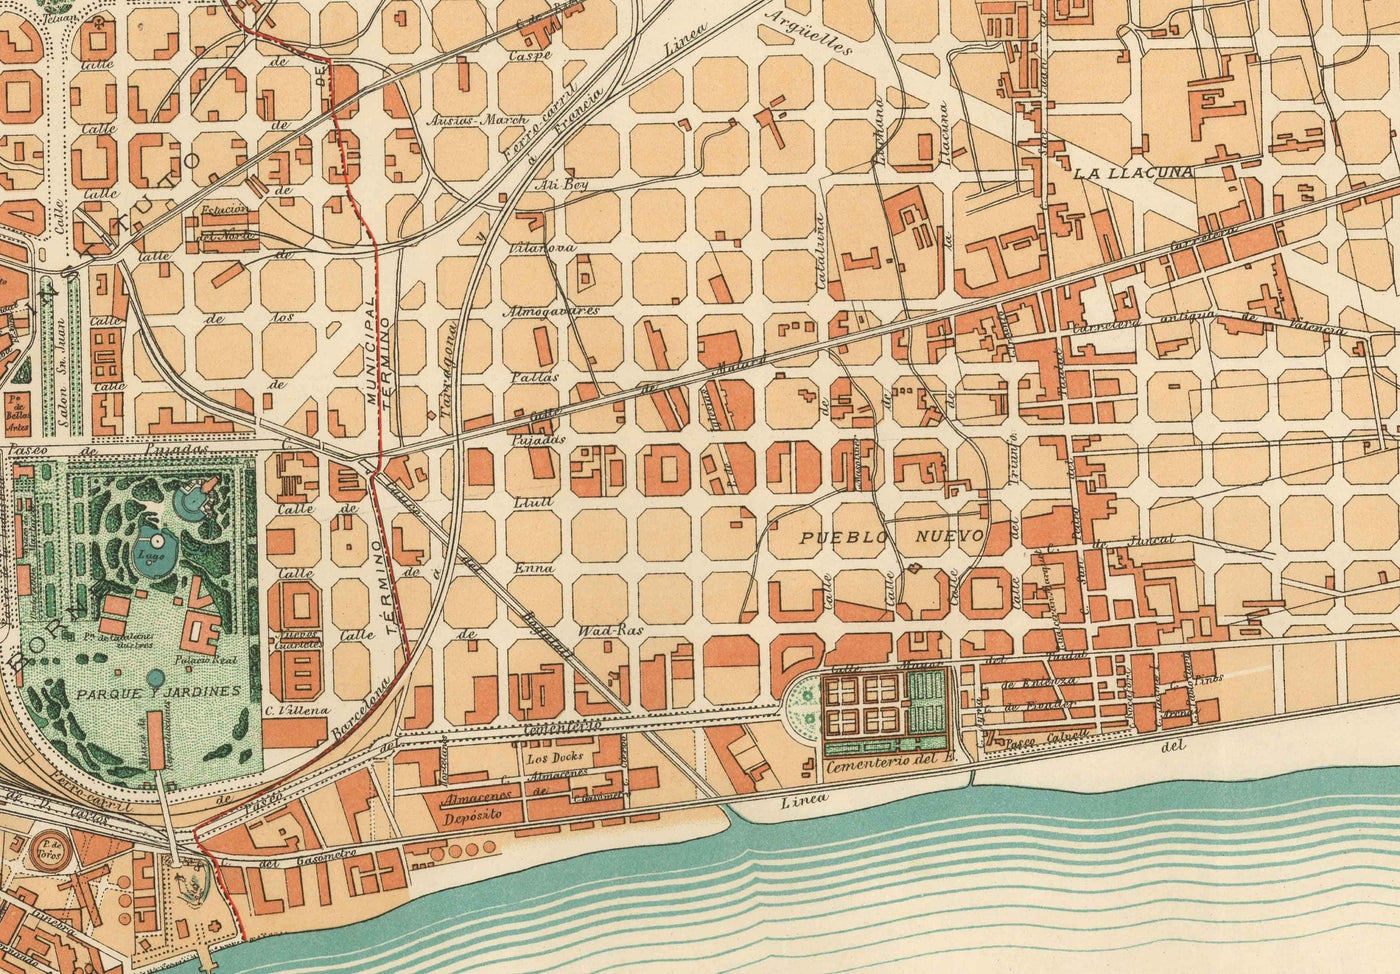 Old Map of Barcelona, 1891 by DJM Serra - Sagrada Família, Gothic Quarter, Cathedrals, Parks, Las Ramblas, Streets